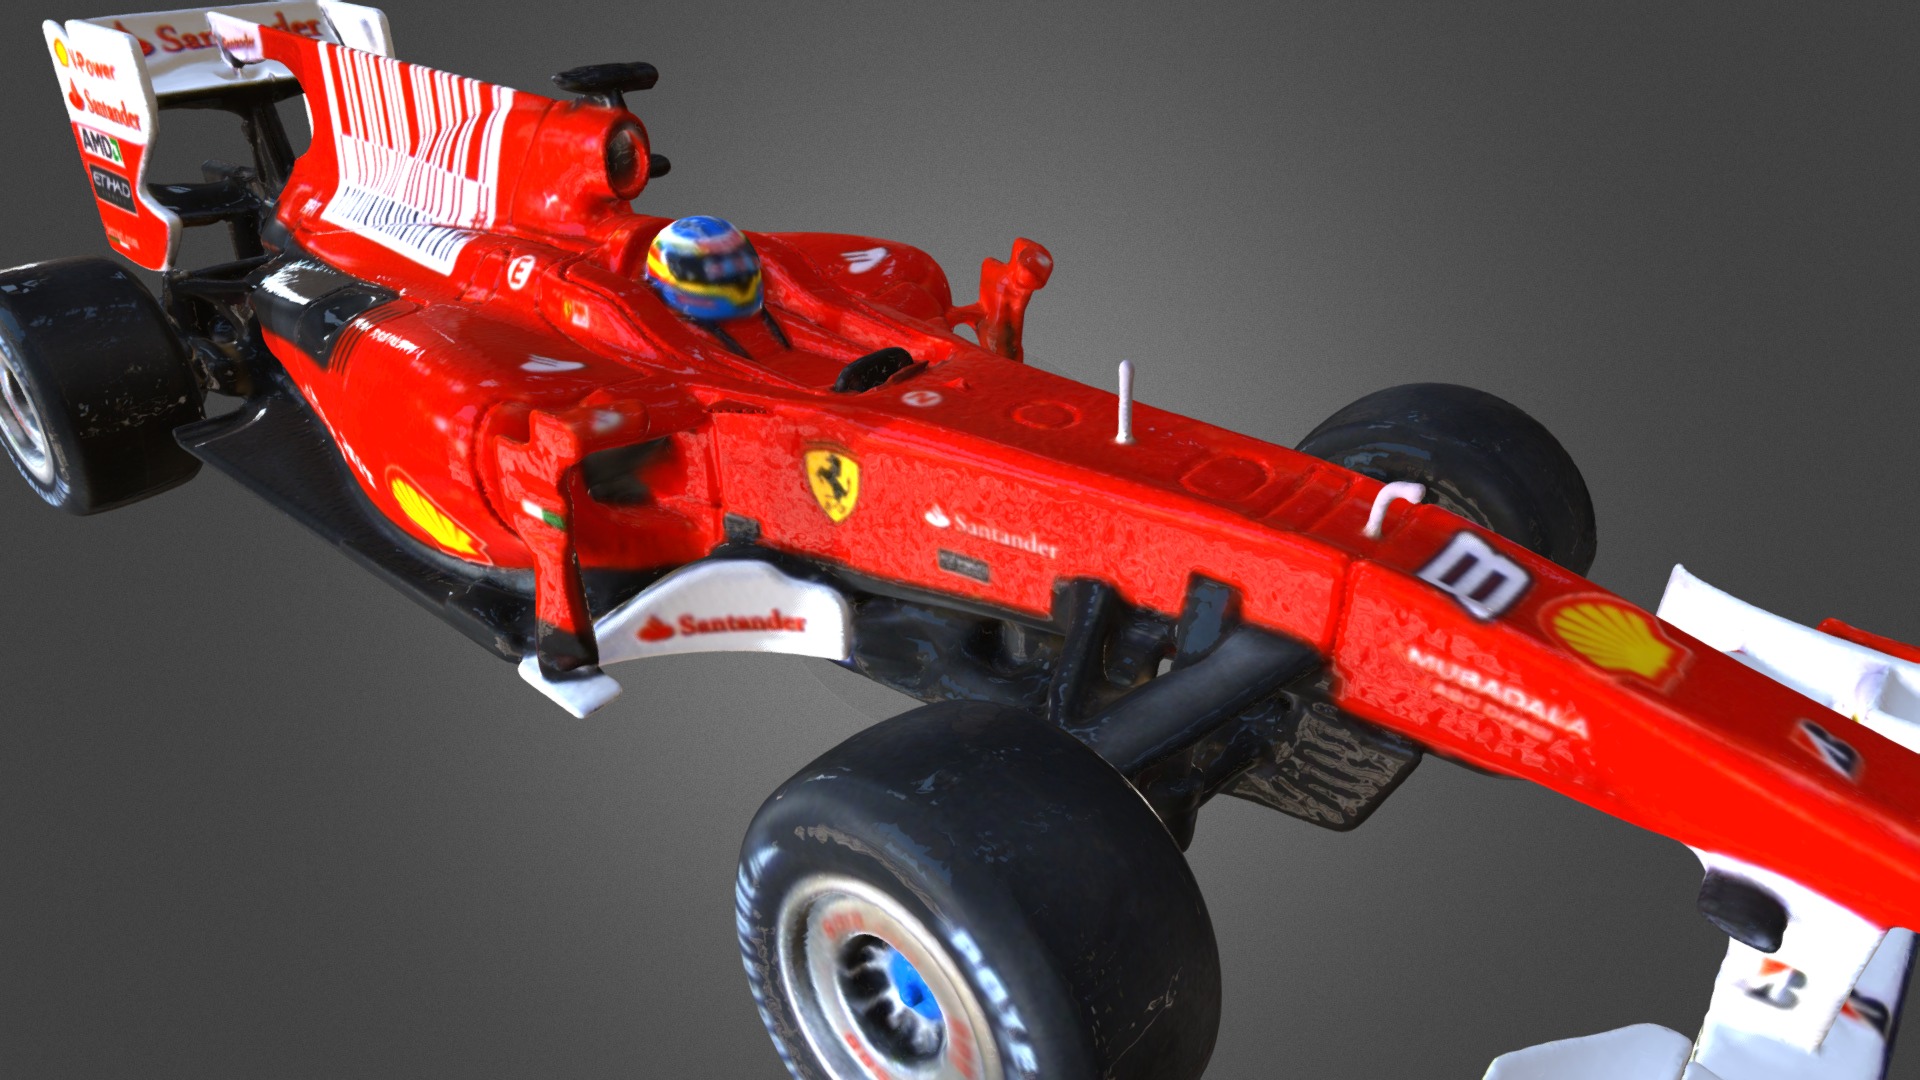 3D model Ferrari F10 1/24 RC car - This is a 3D model of the Ferrari F10 1/24 RC car. The 3D model is about a red and white race car.